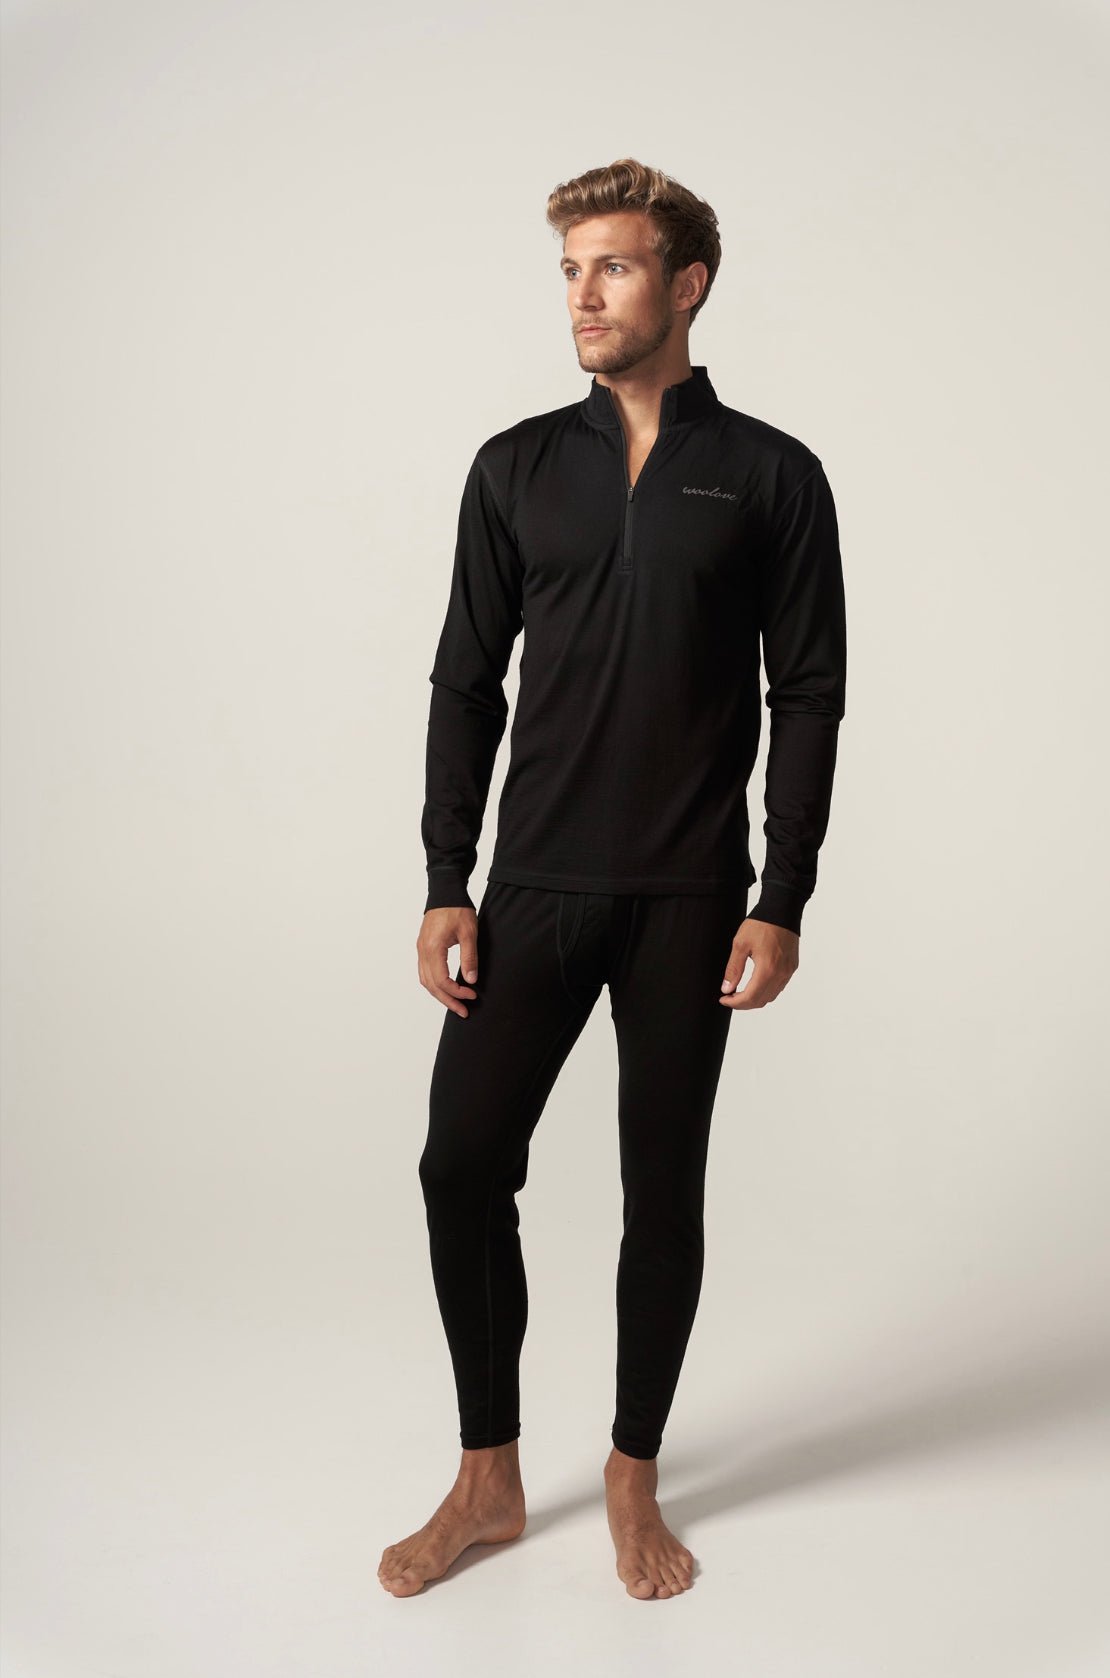 Men's 100% Merino Wool Long Underwear Base Layer Leggings 260 GSM - He –  Woolove Apparel